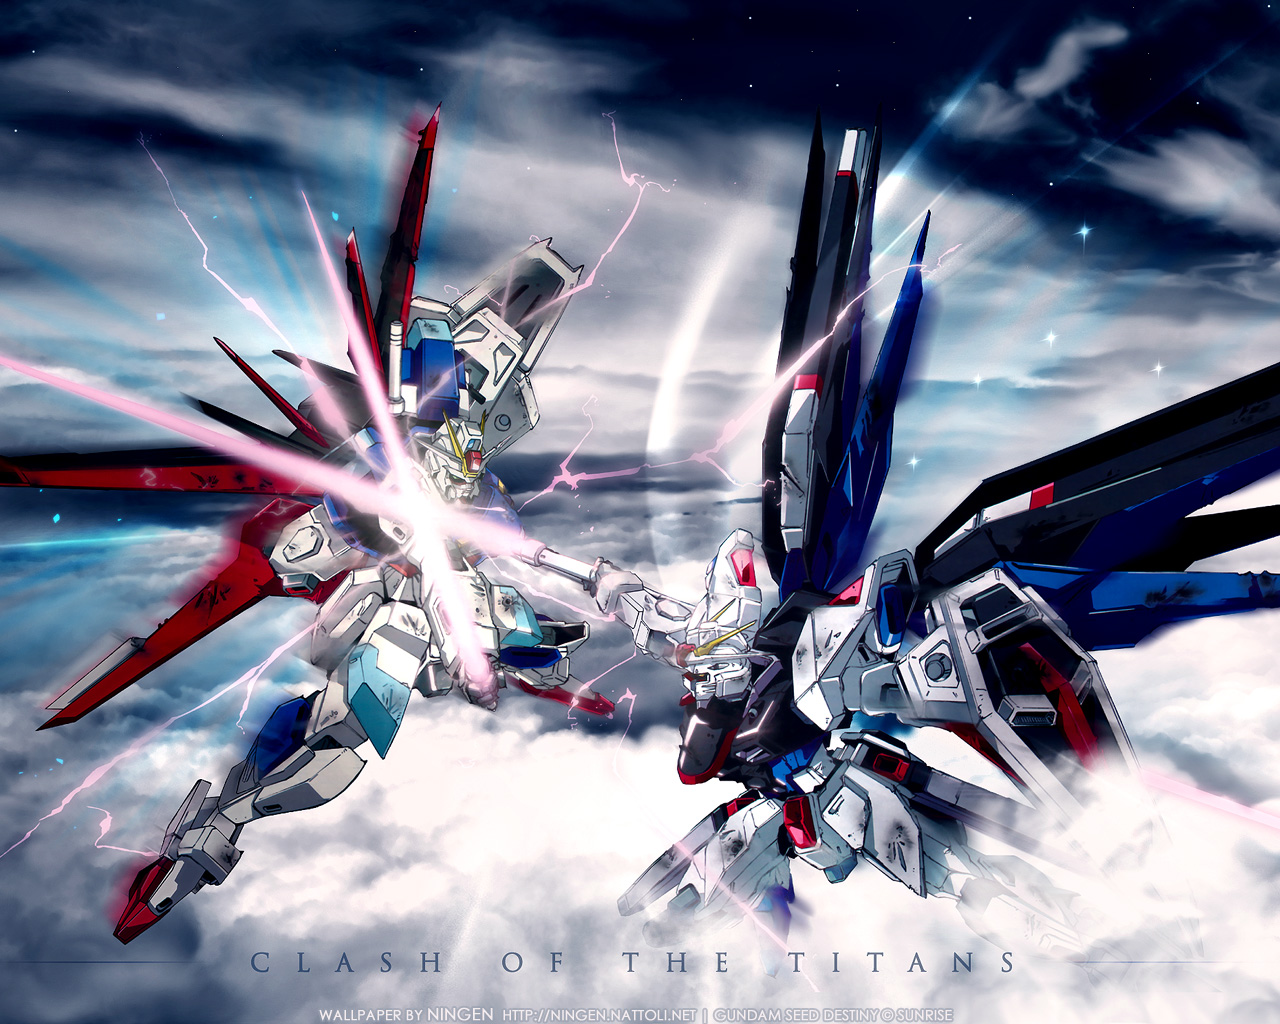 Freedom Gundam Wallpaper Sf Wallpaper